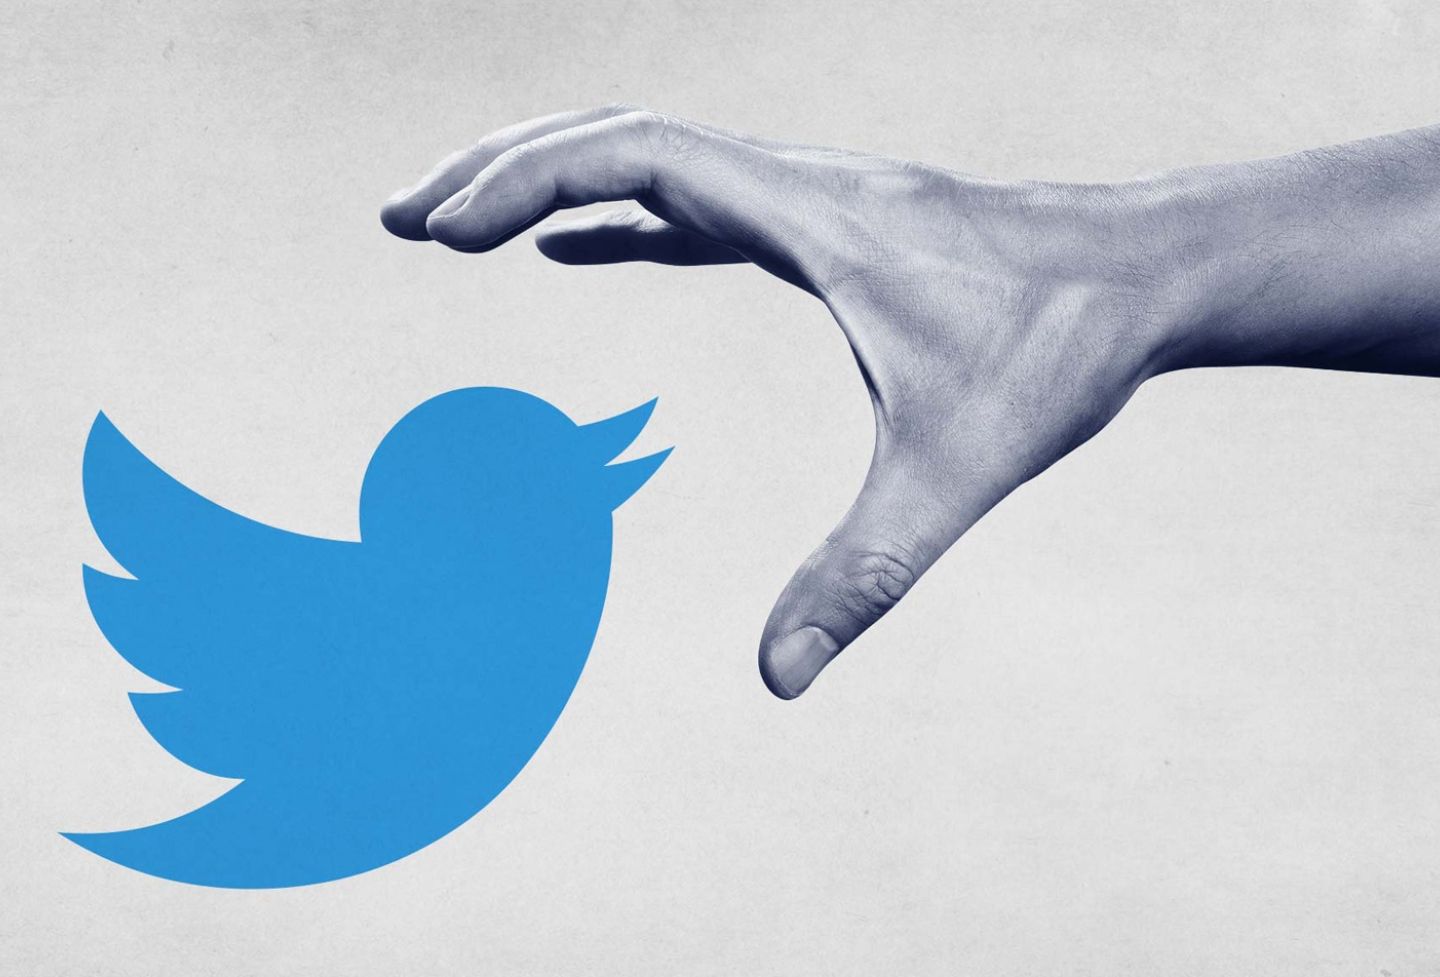 Hand grabbing Twitter logo